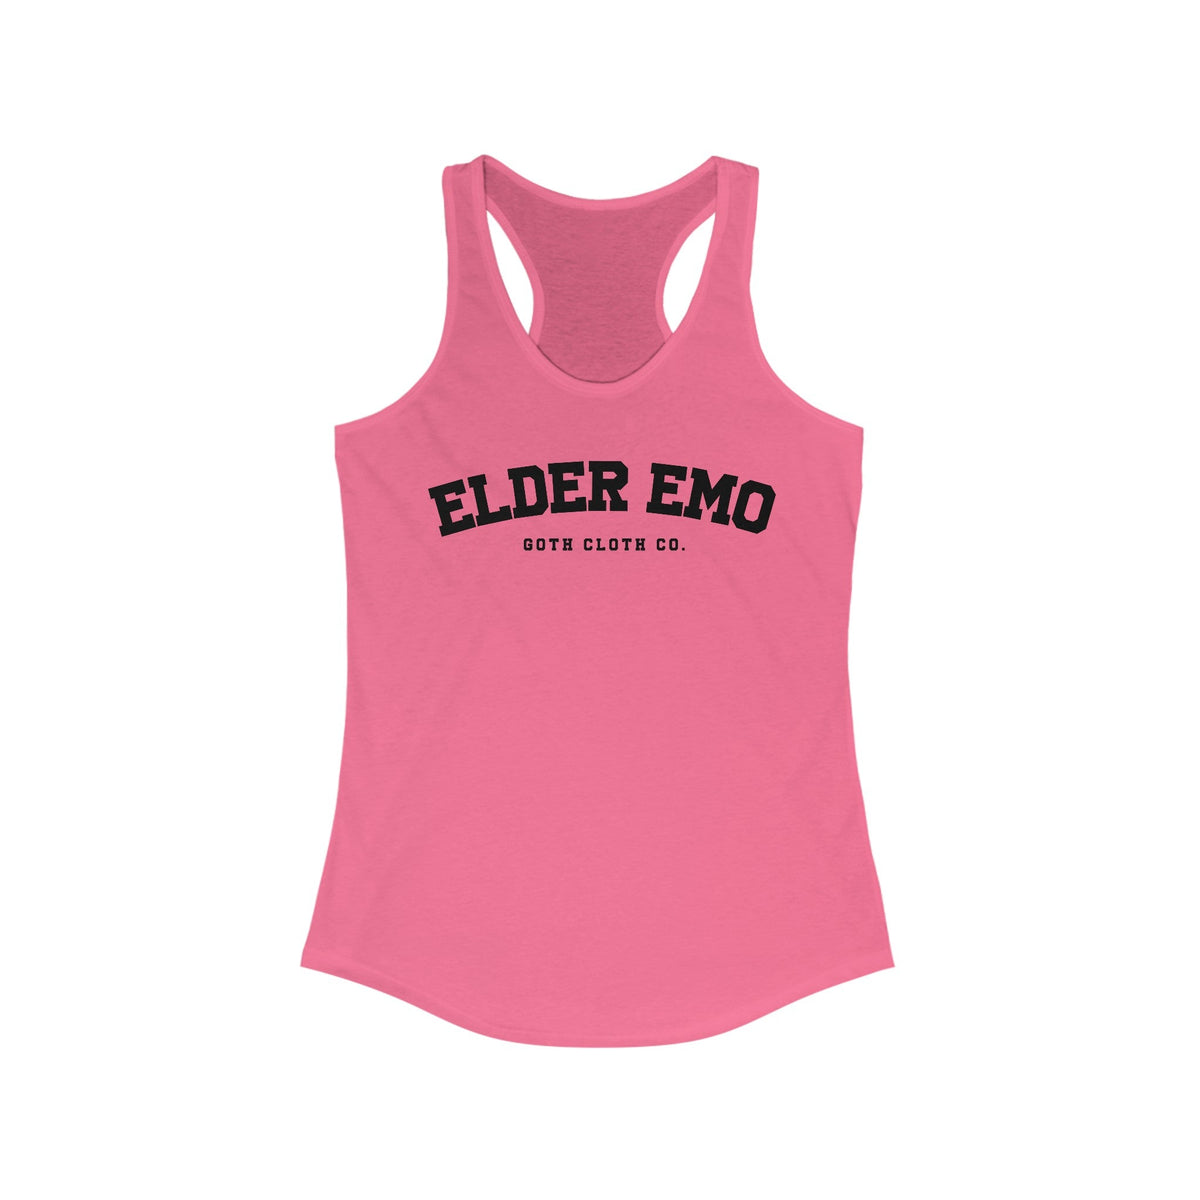 Elder Emo College Women's Racerback Tank - Goth Cloth Co.Tank Top23338184060266228223